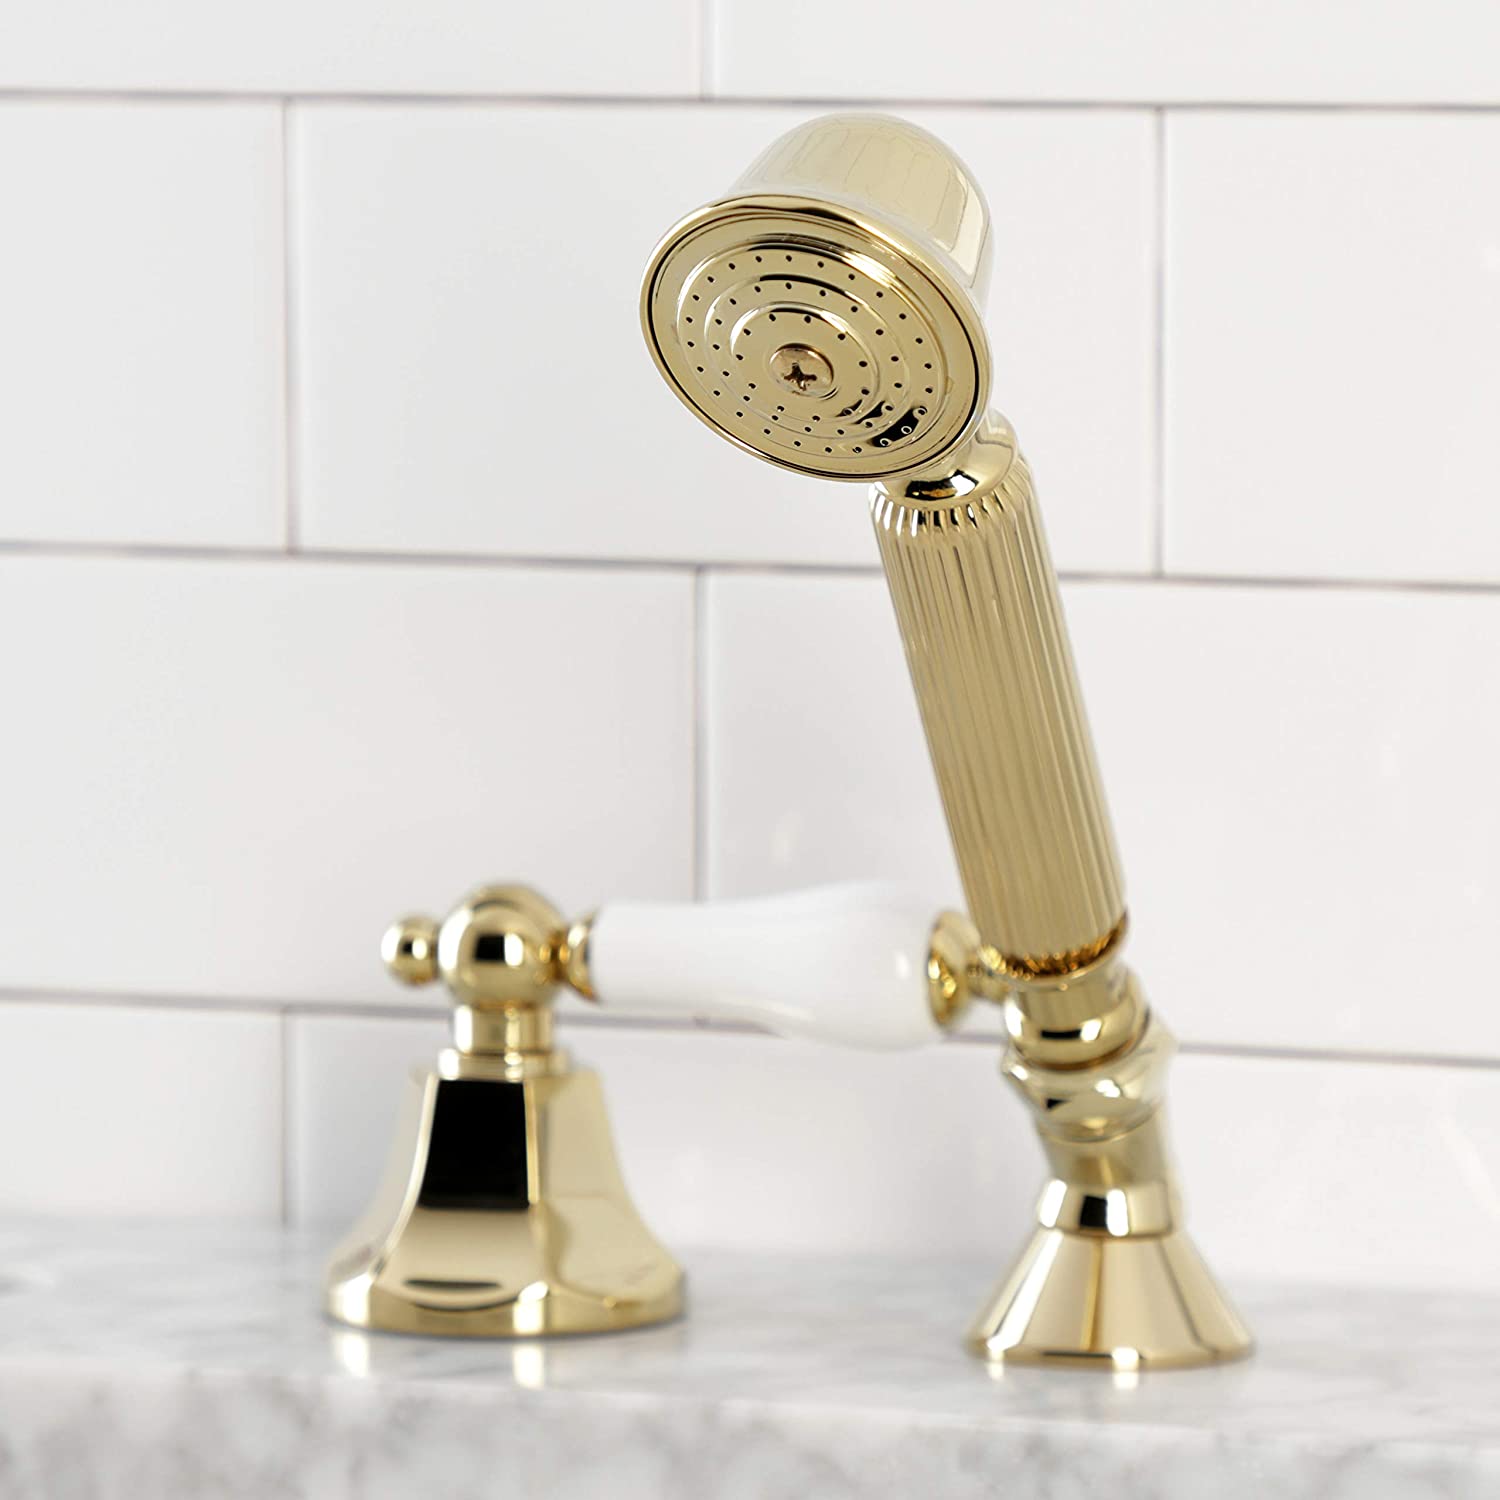 Kingston Brass KSK4302PLTR Deck Mount Hand Shower with Diverter for Roman Tub Faucet, Polished Brass